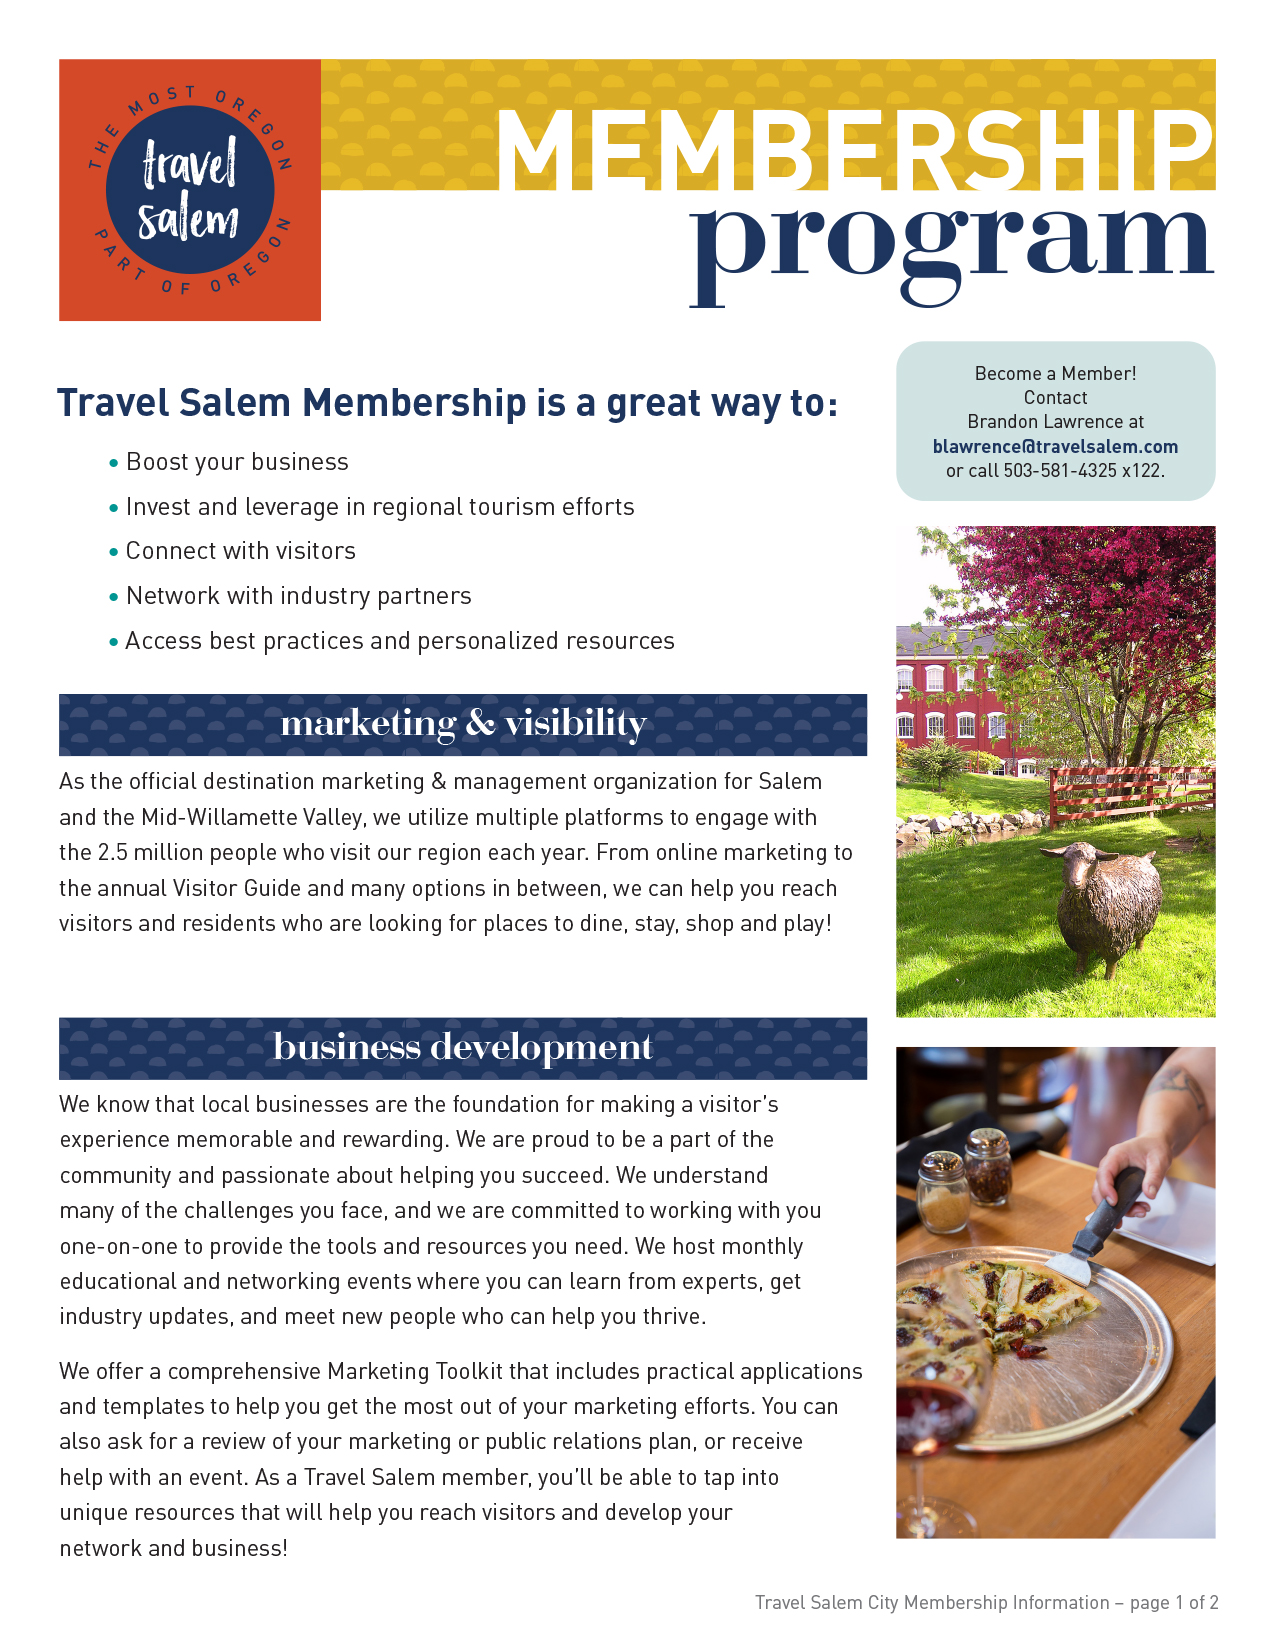 Travel Salem City Membership Information Flyer